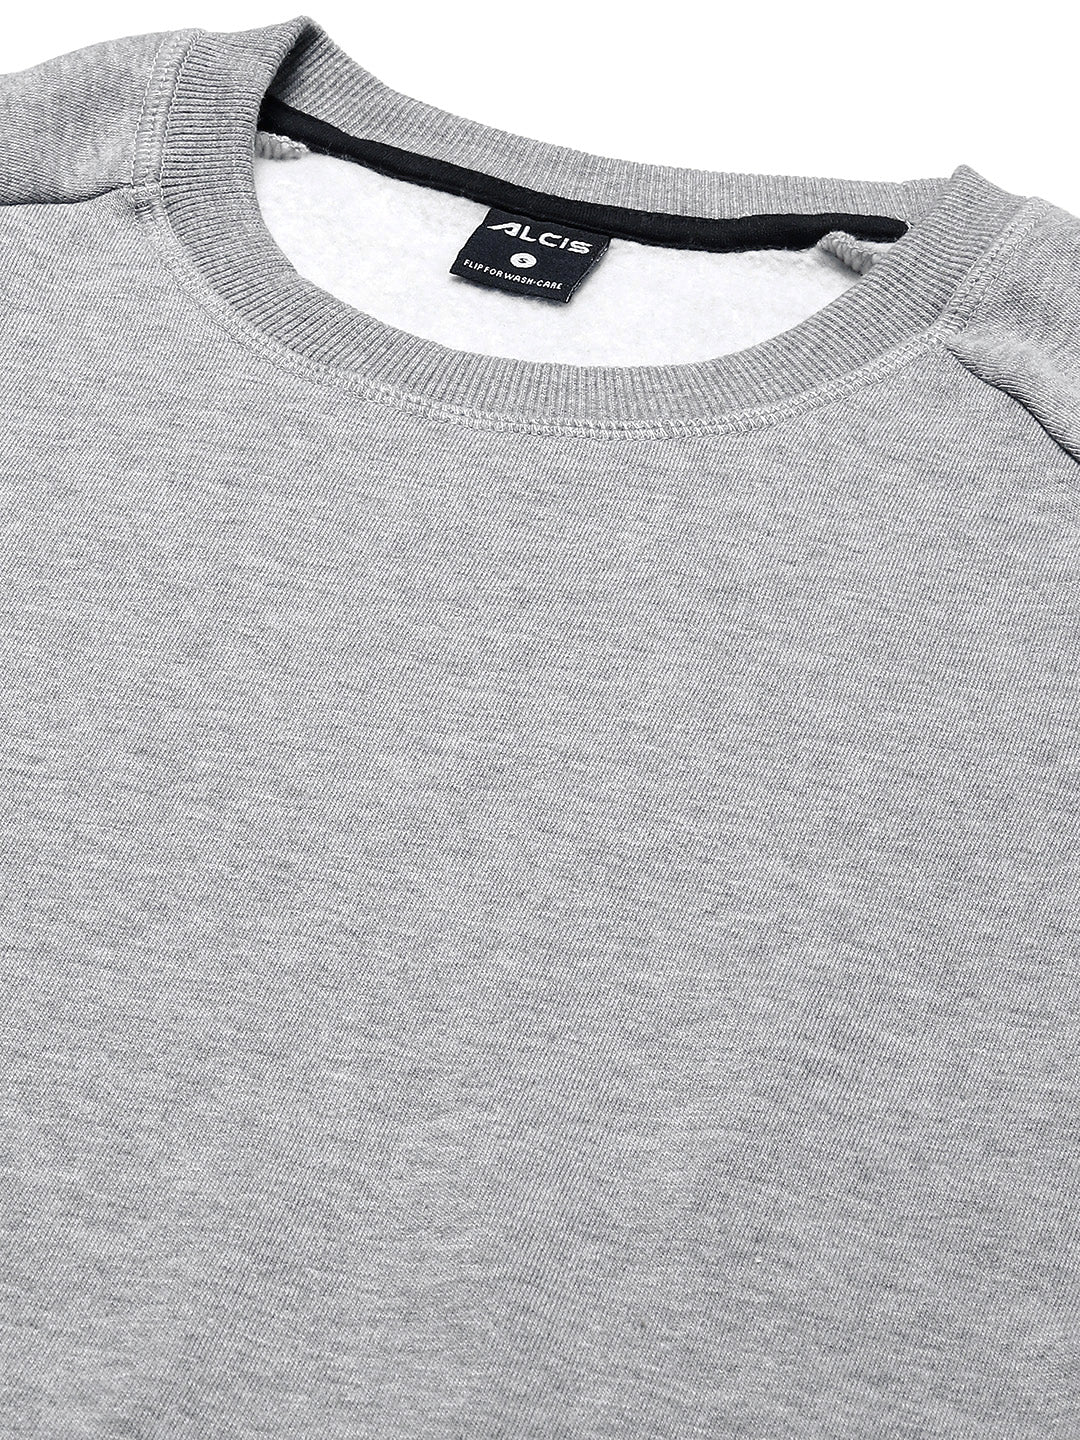 Alcis Women Grey Printed Detail Sweatshirt